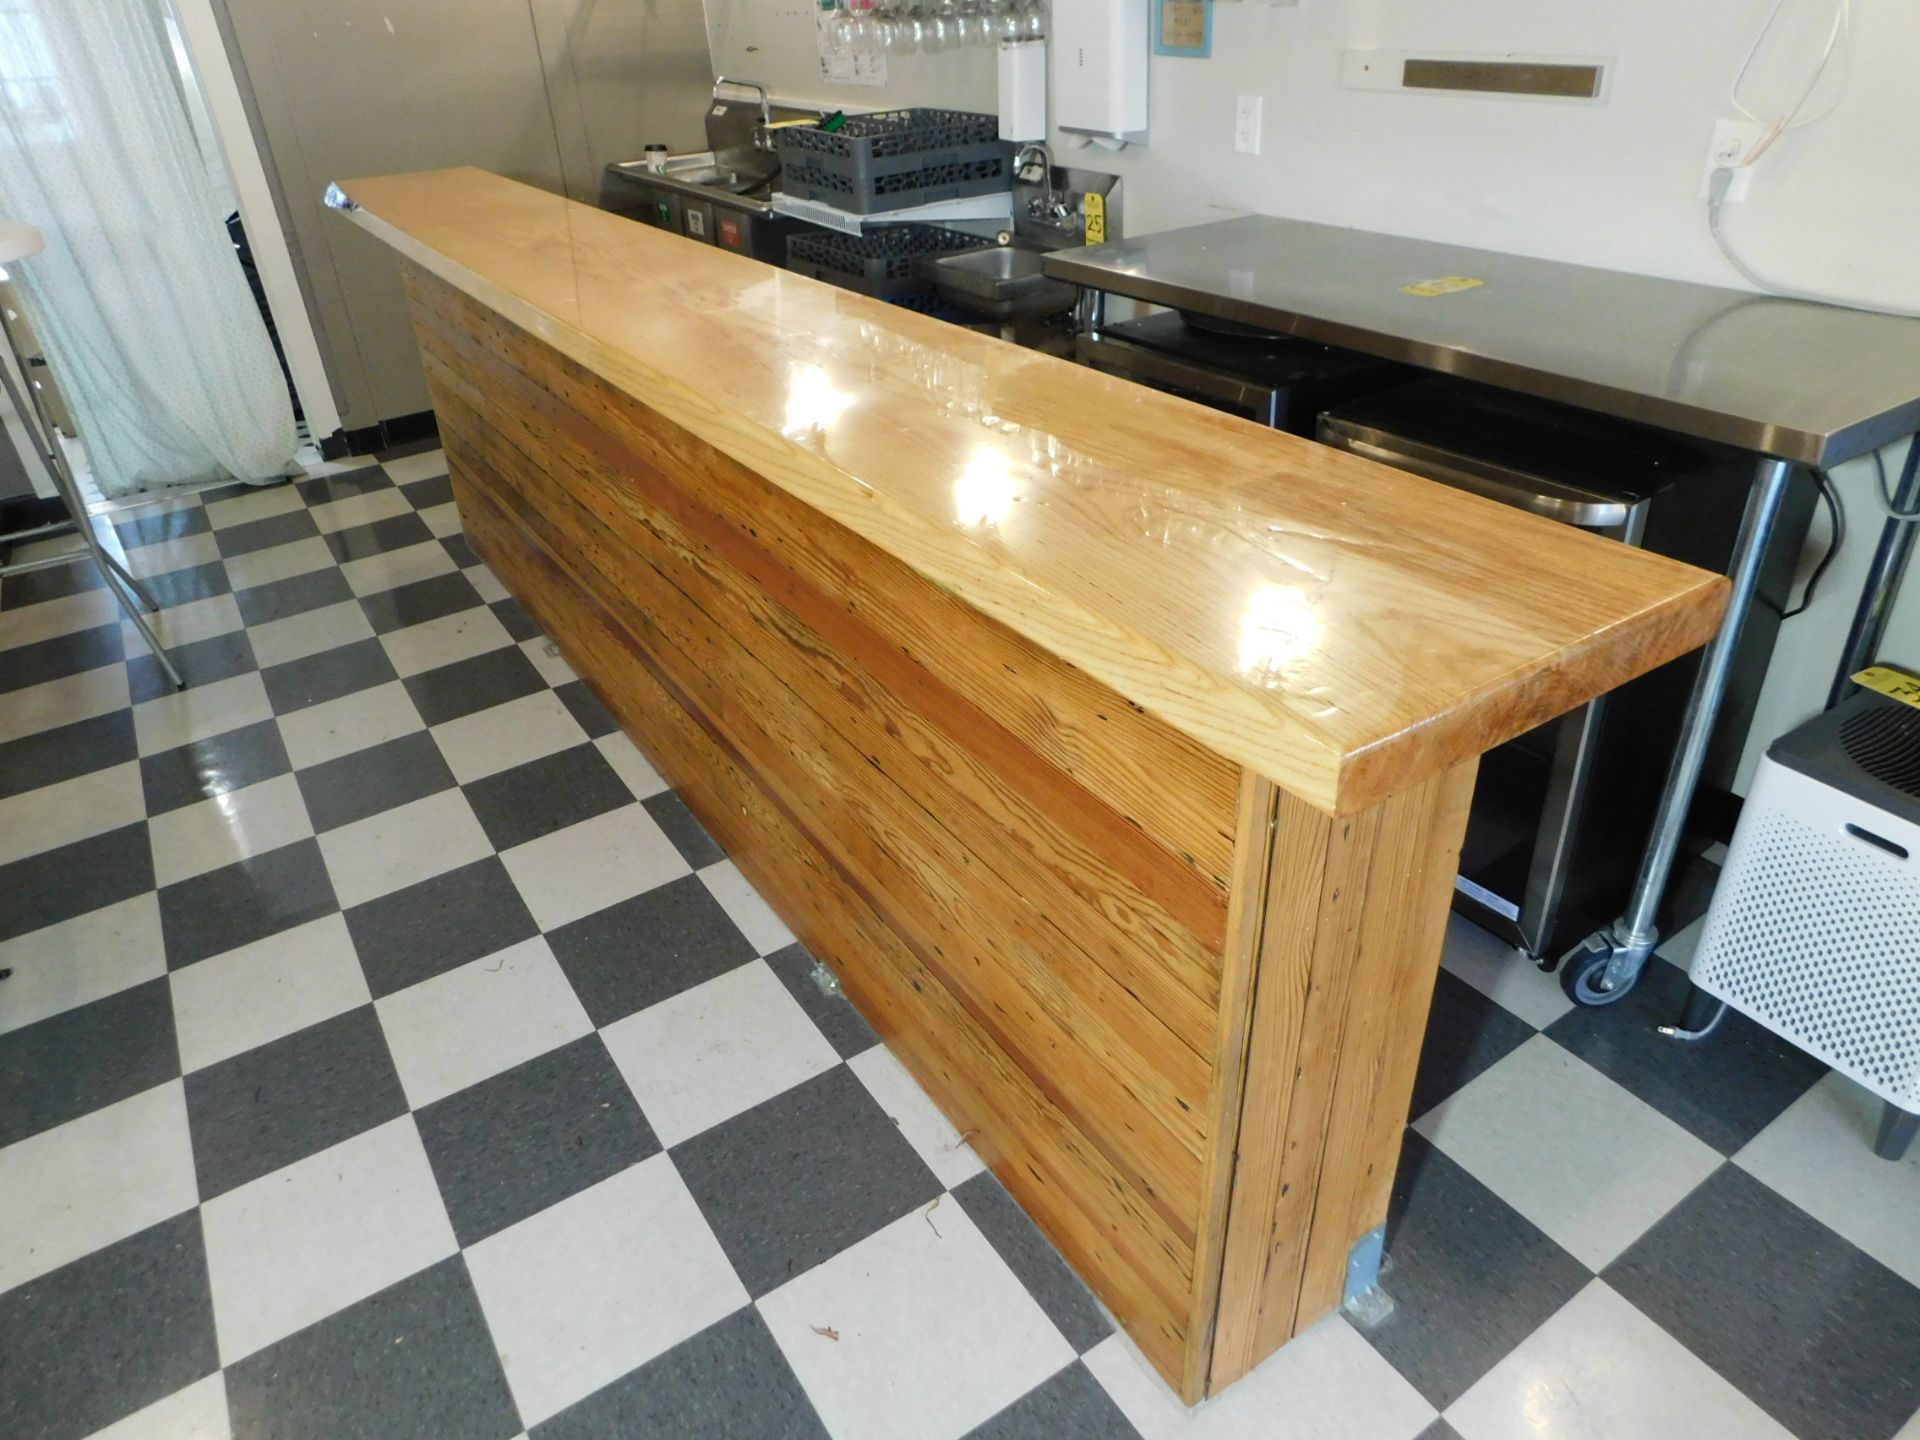 12' Wood Finish Bar, Mill Cut Hardwood Slab, Epoxy Counter Top, Wood Plank Sides, 12' L x 17" W x